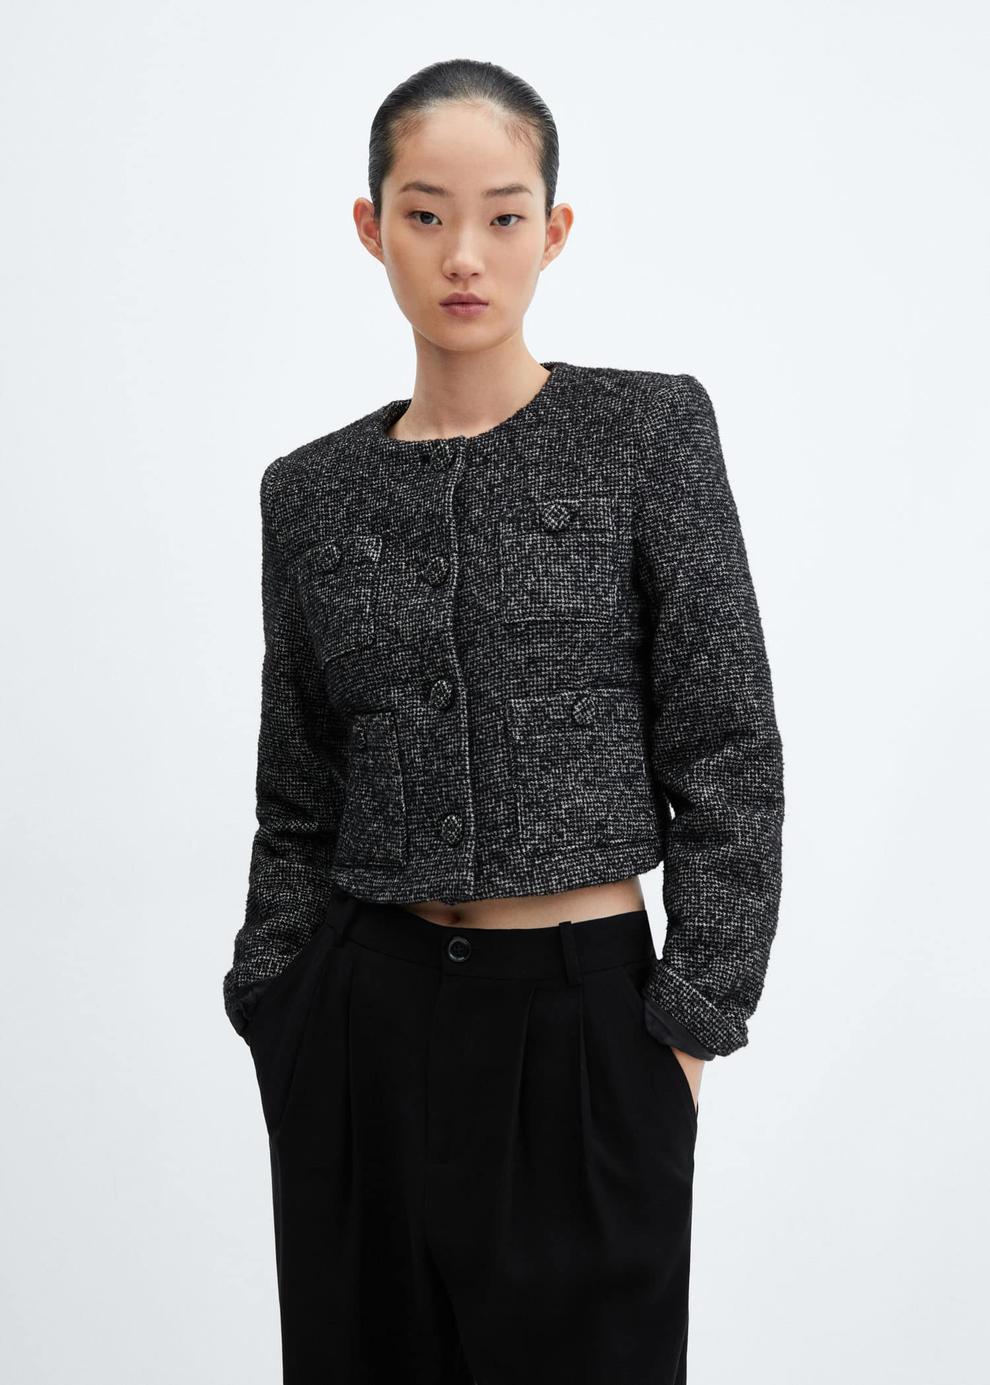 Pocket tweed jacket offers at $79.99 in Mango